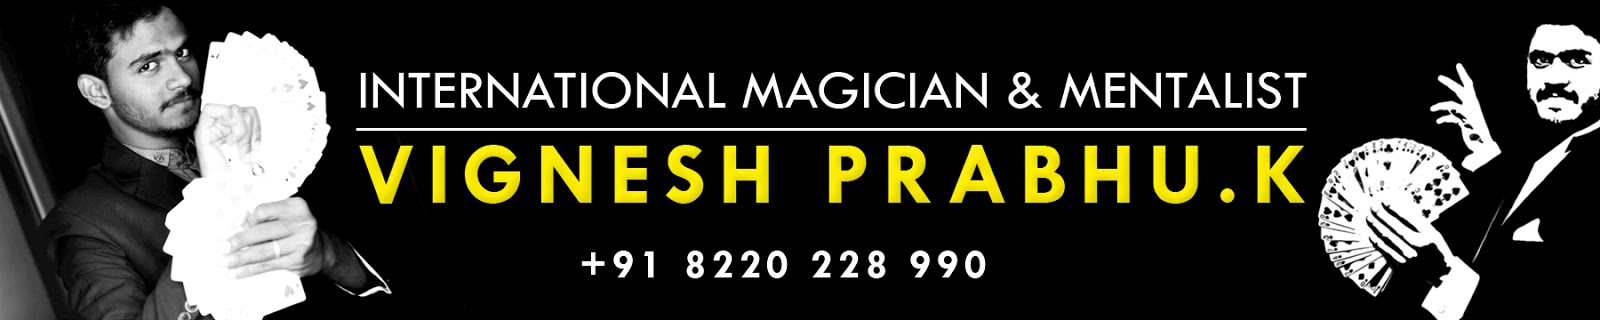 International Magician Vignesh prabhu